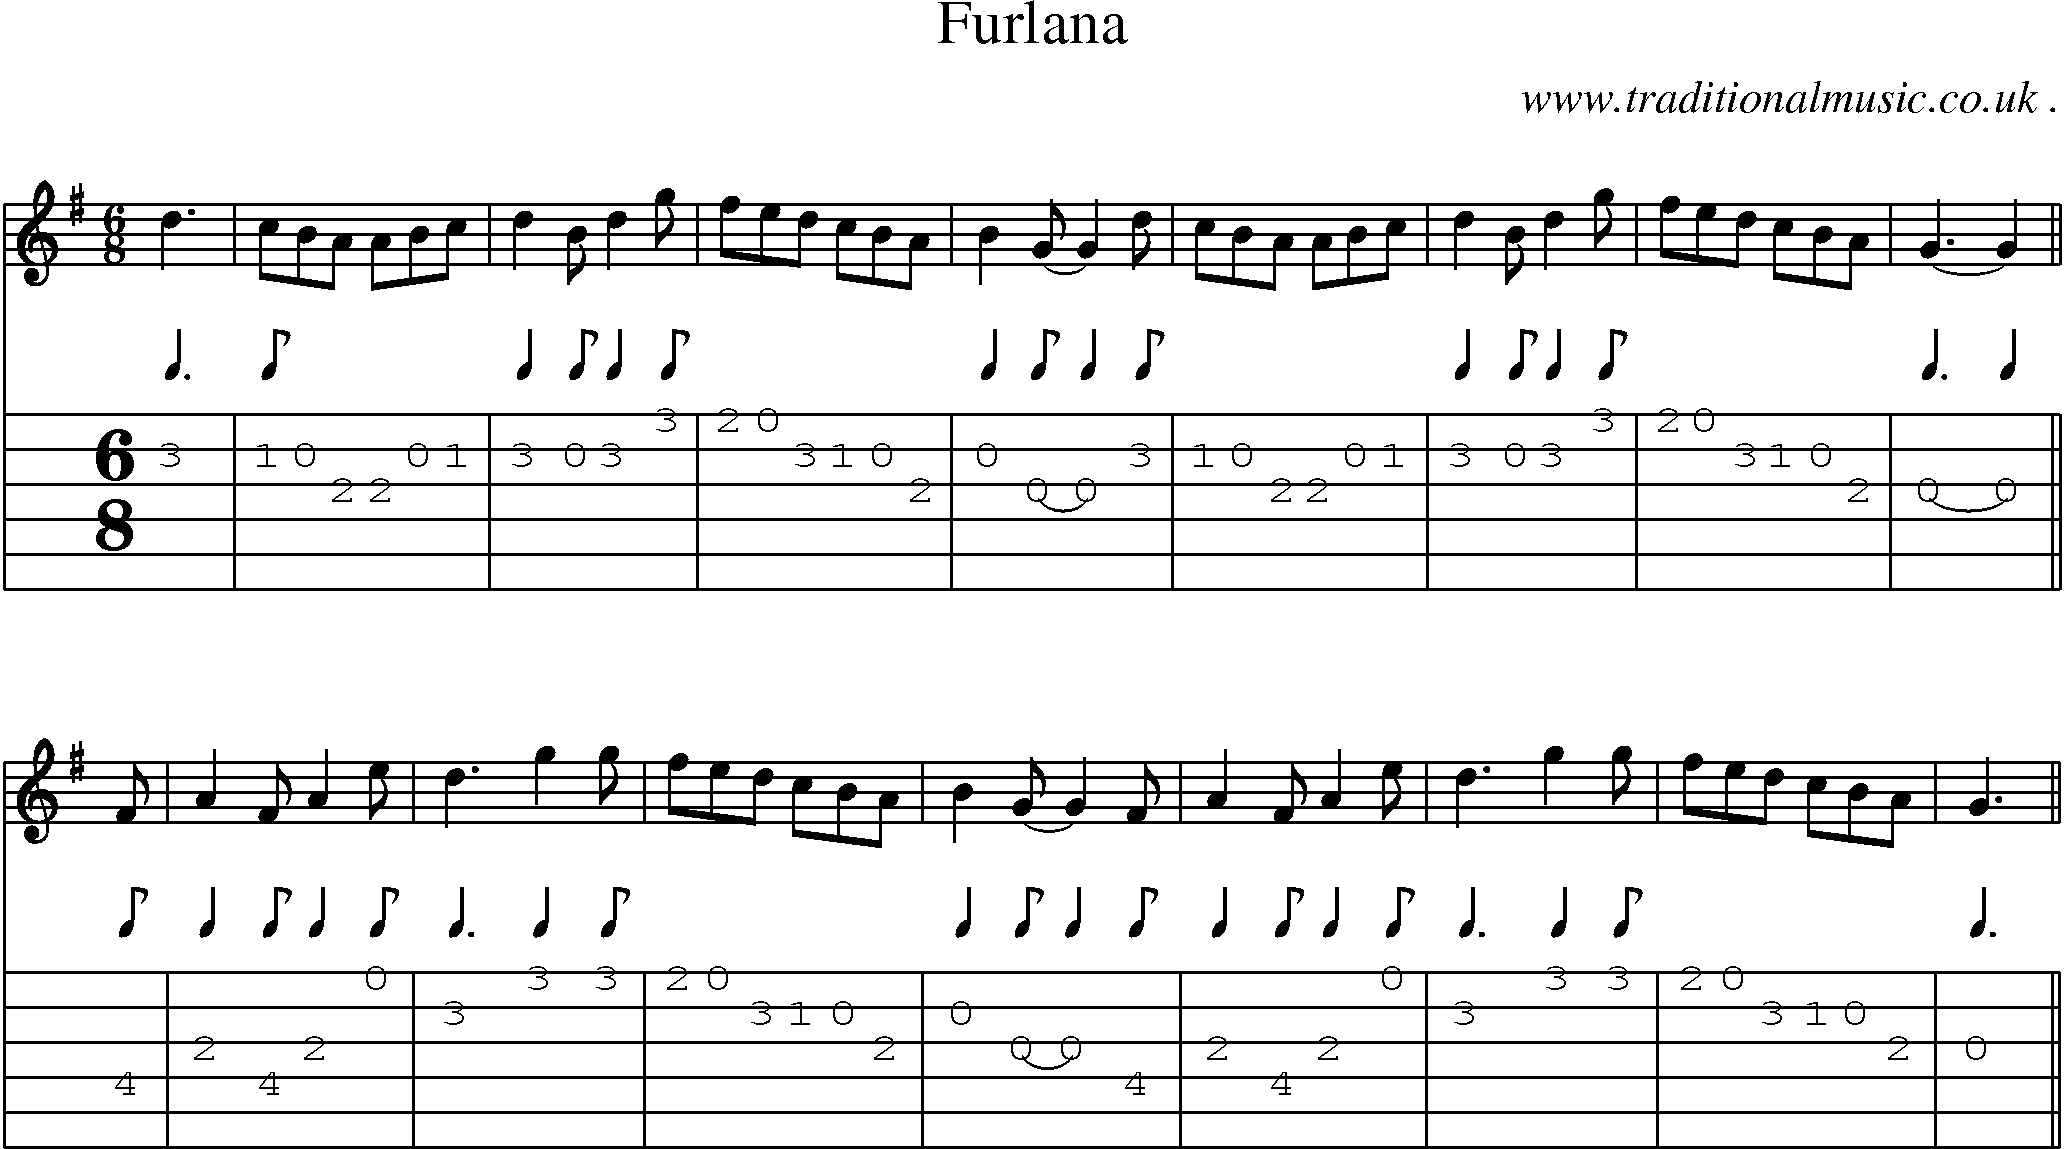 Sheet-Music and Guitar Tabs for Furlana